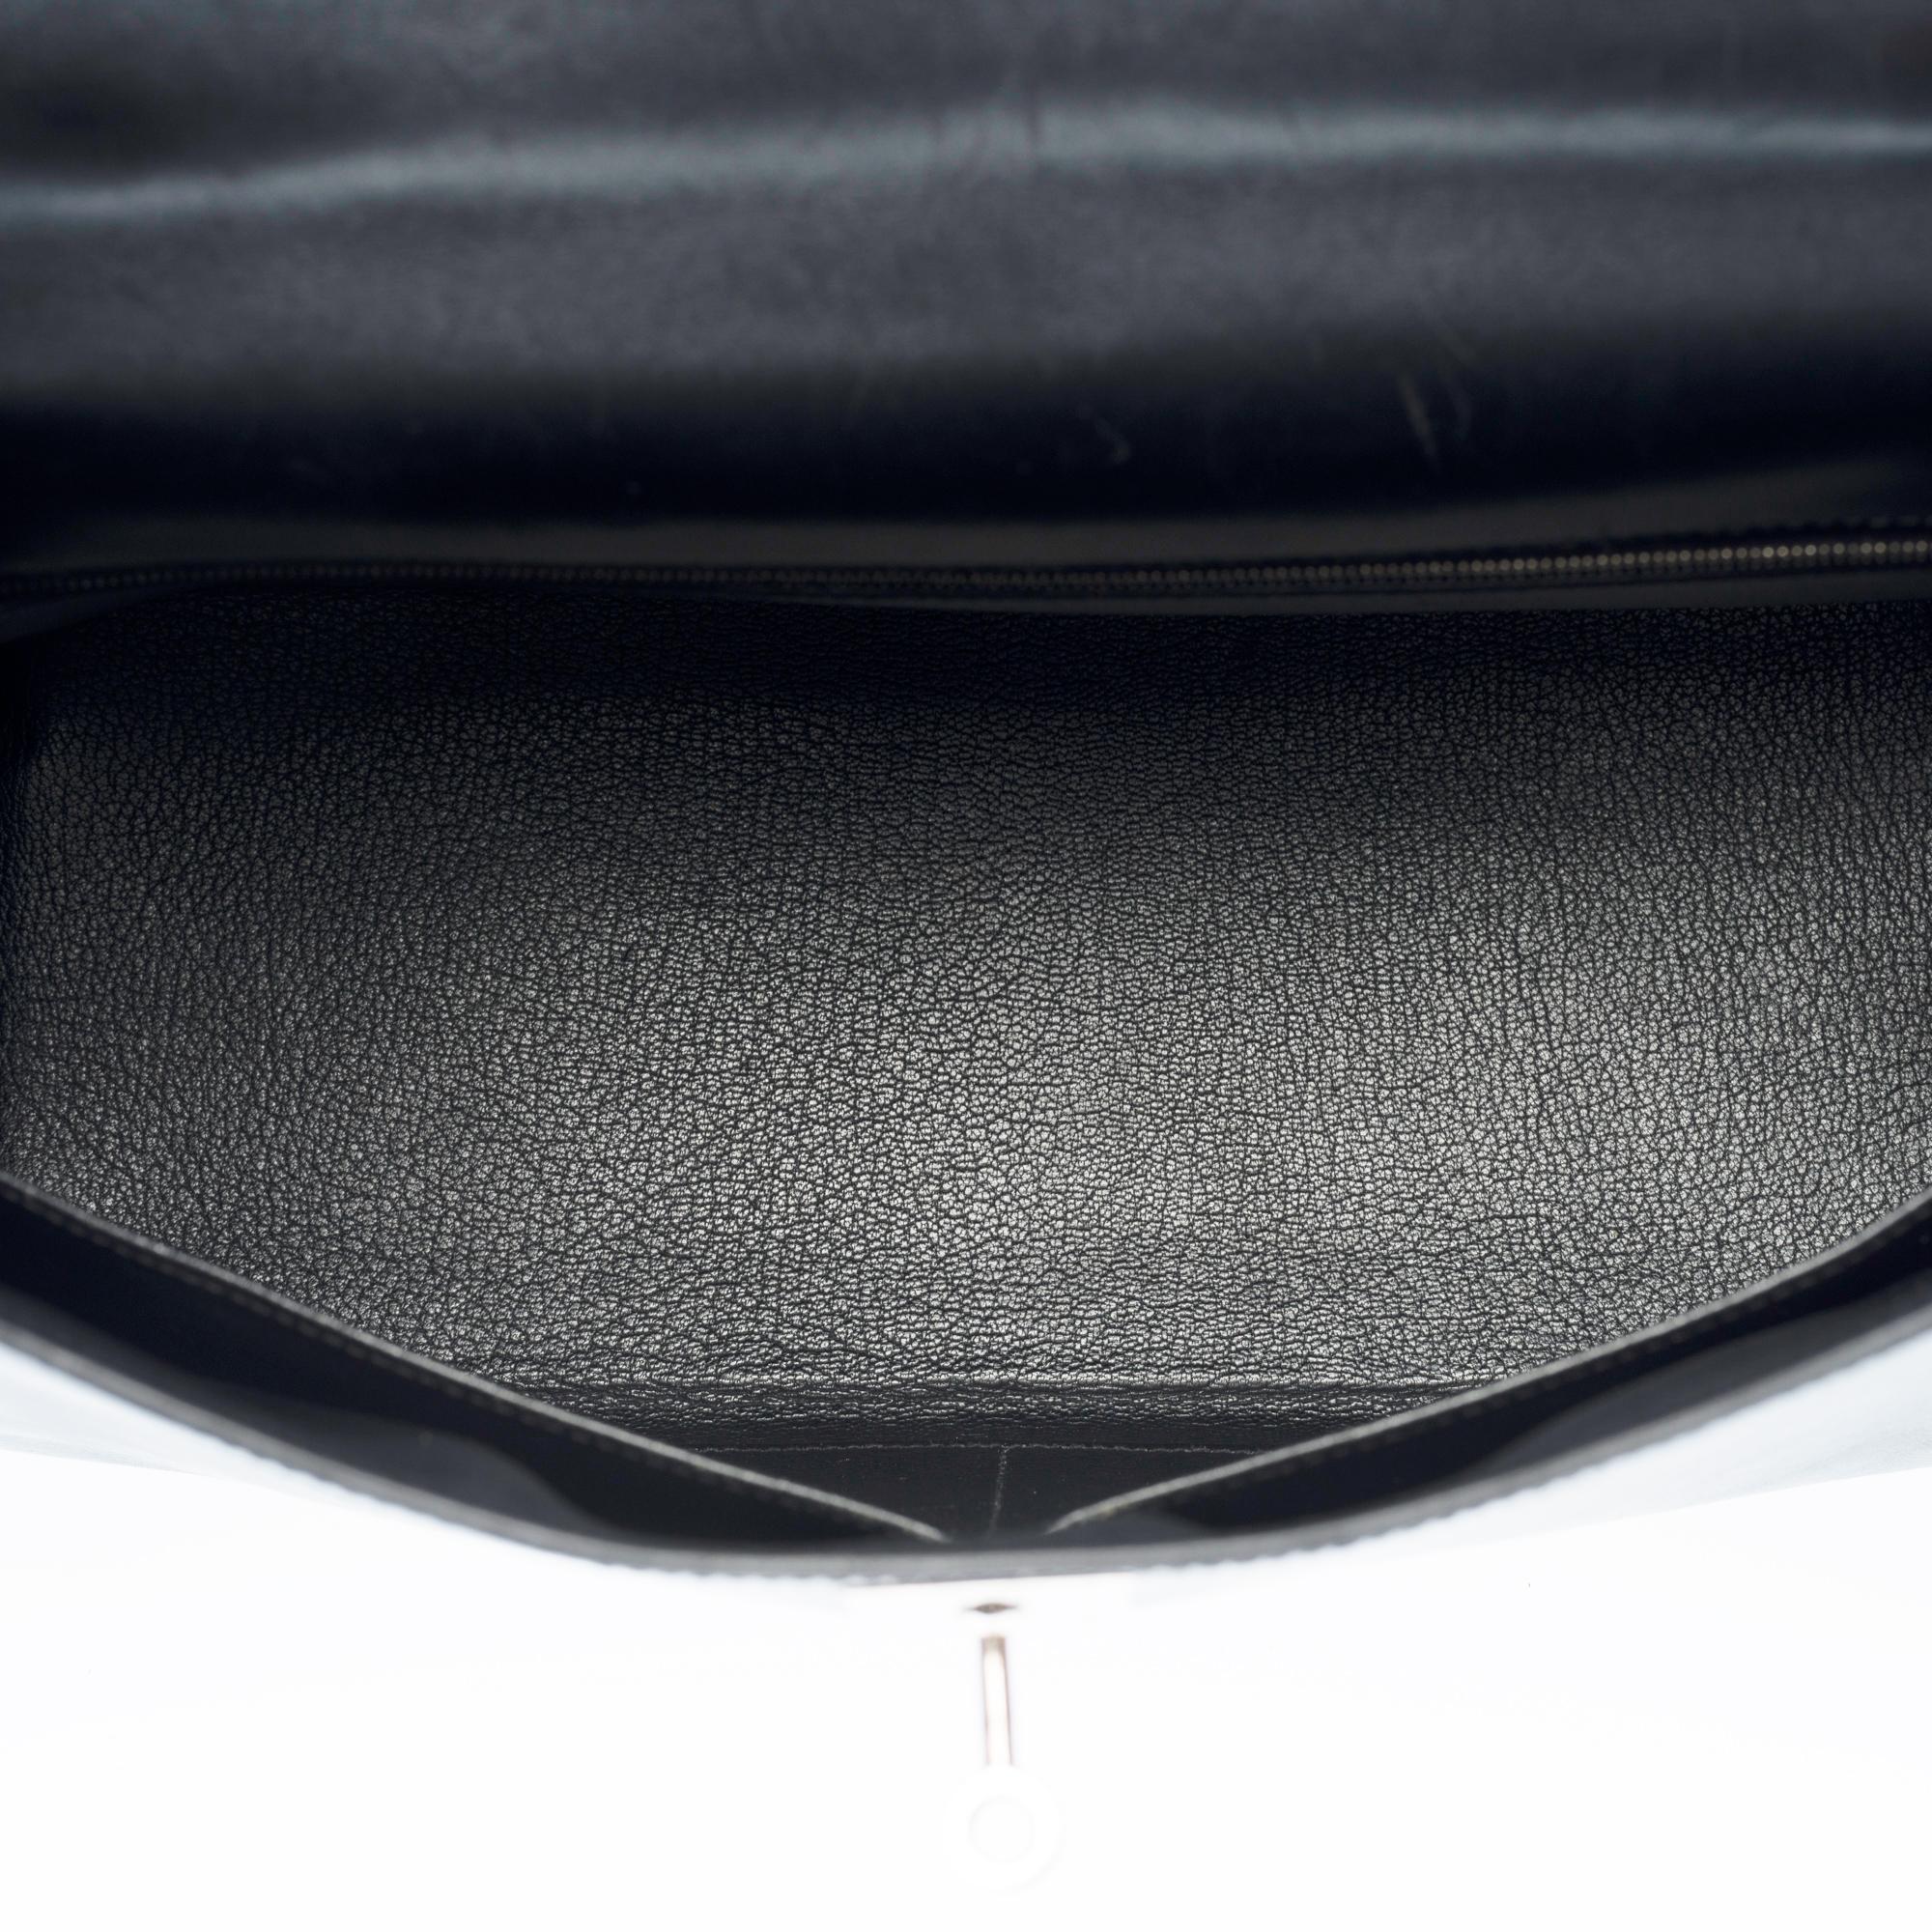 Rare Hermès Kelly 35 retourné handbag strap in Black Calf leather, SHW 3